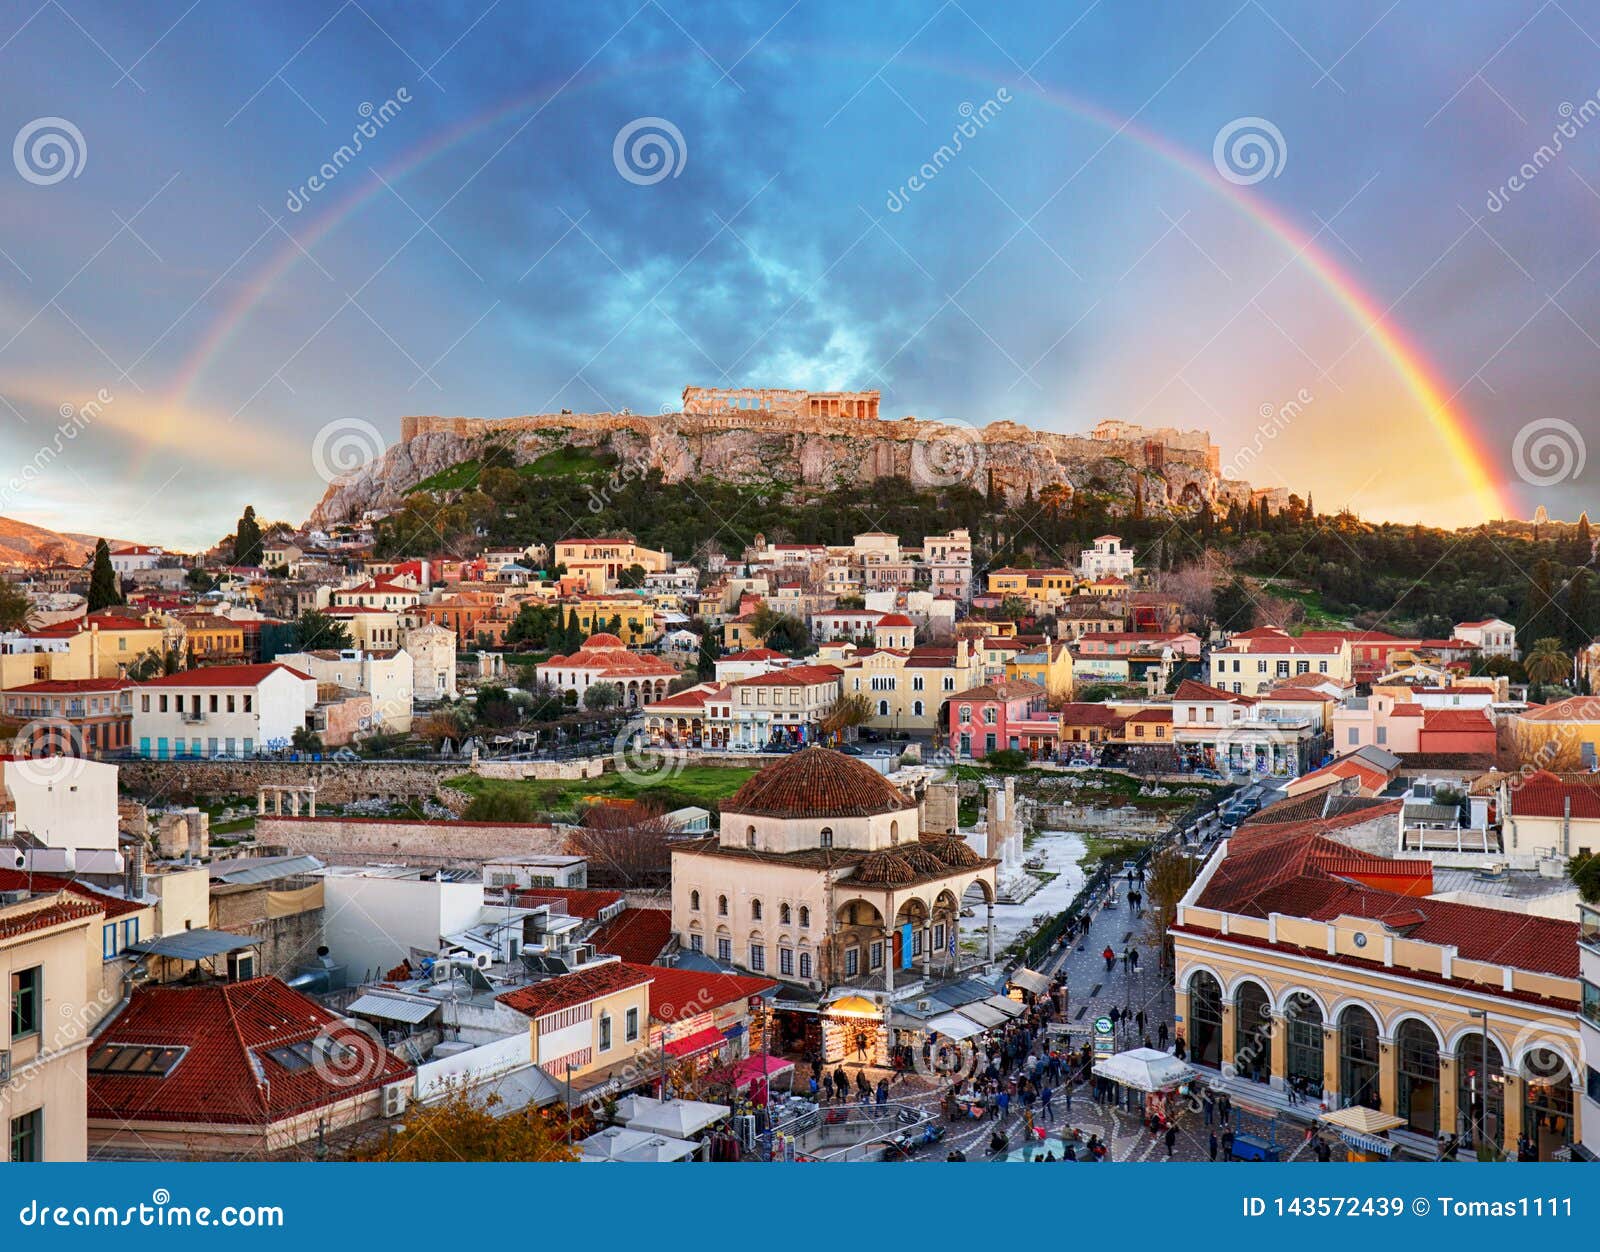 athens, greece -  monastiraki square and ancient acropolis with rainbow